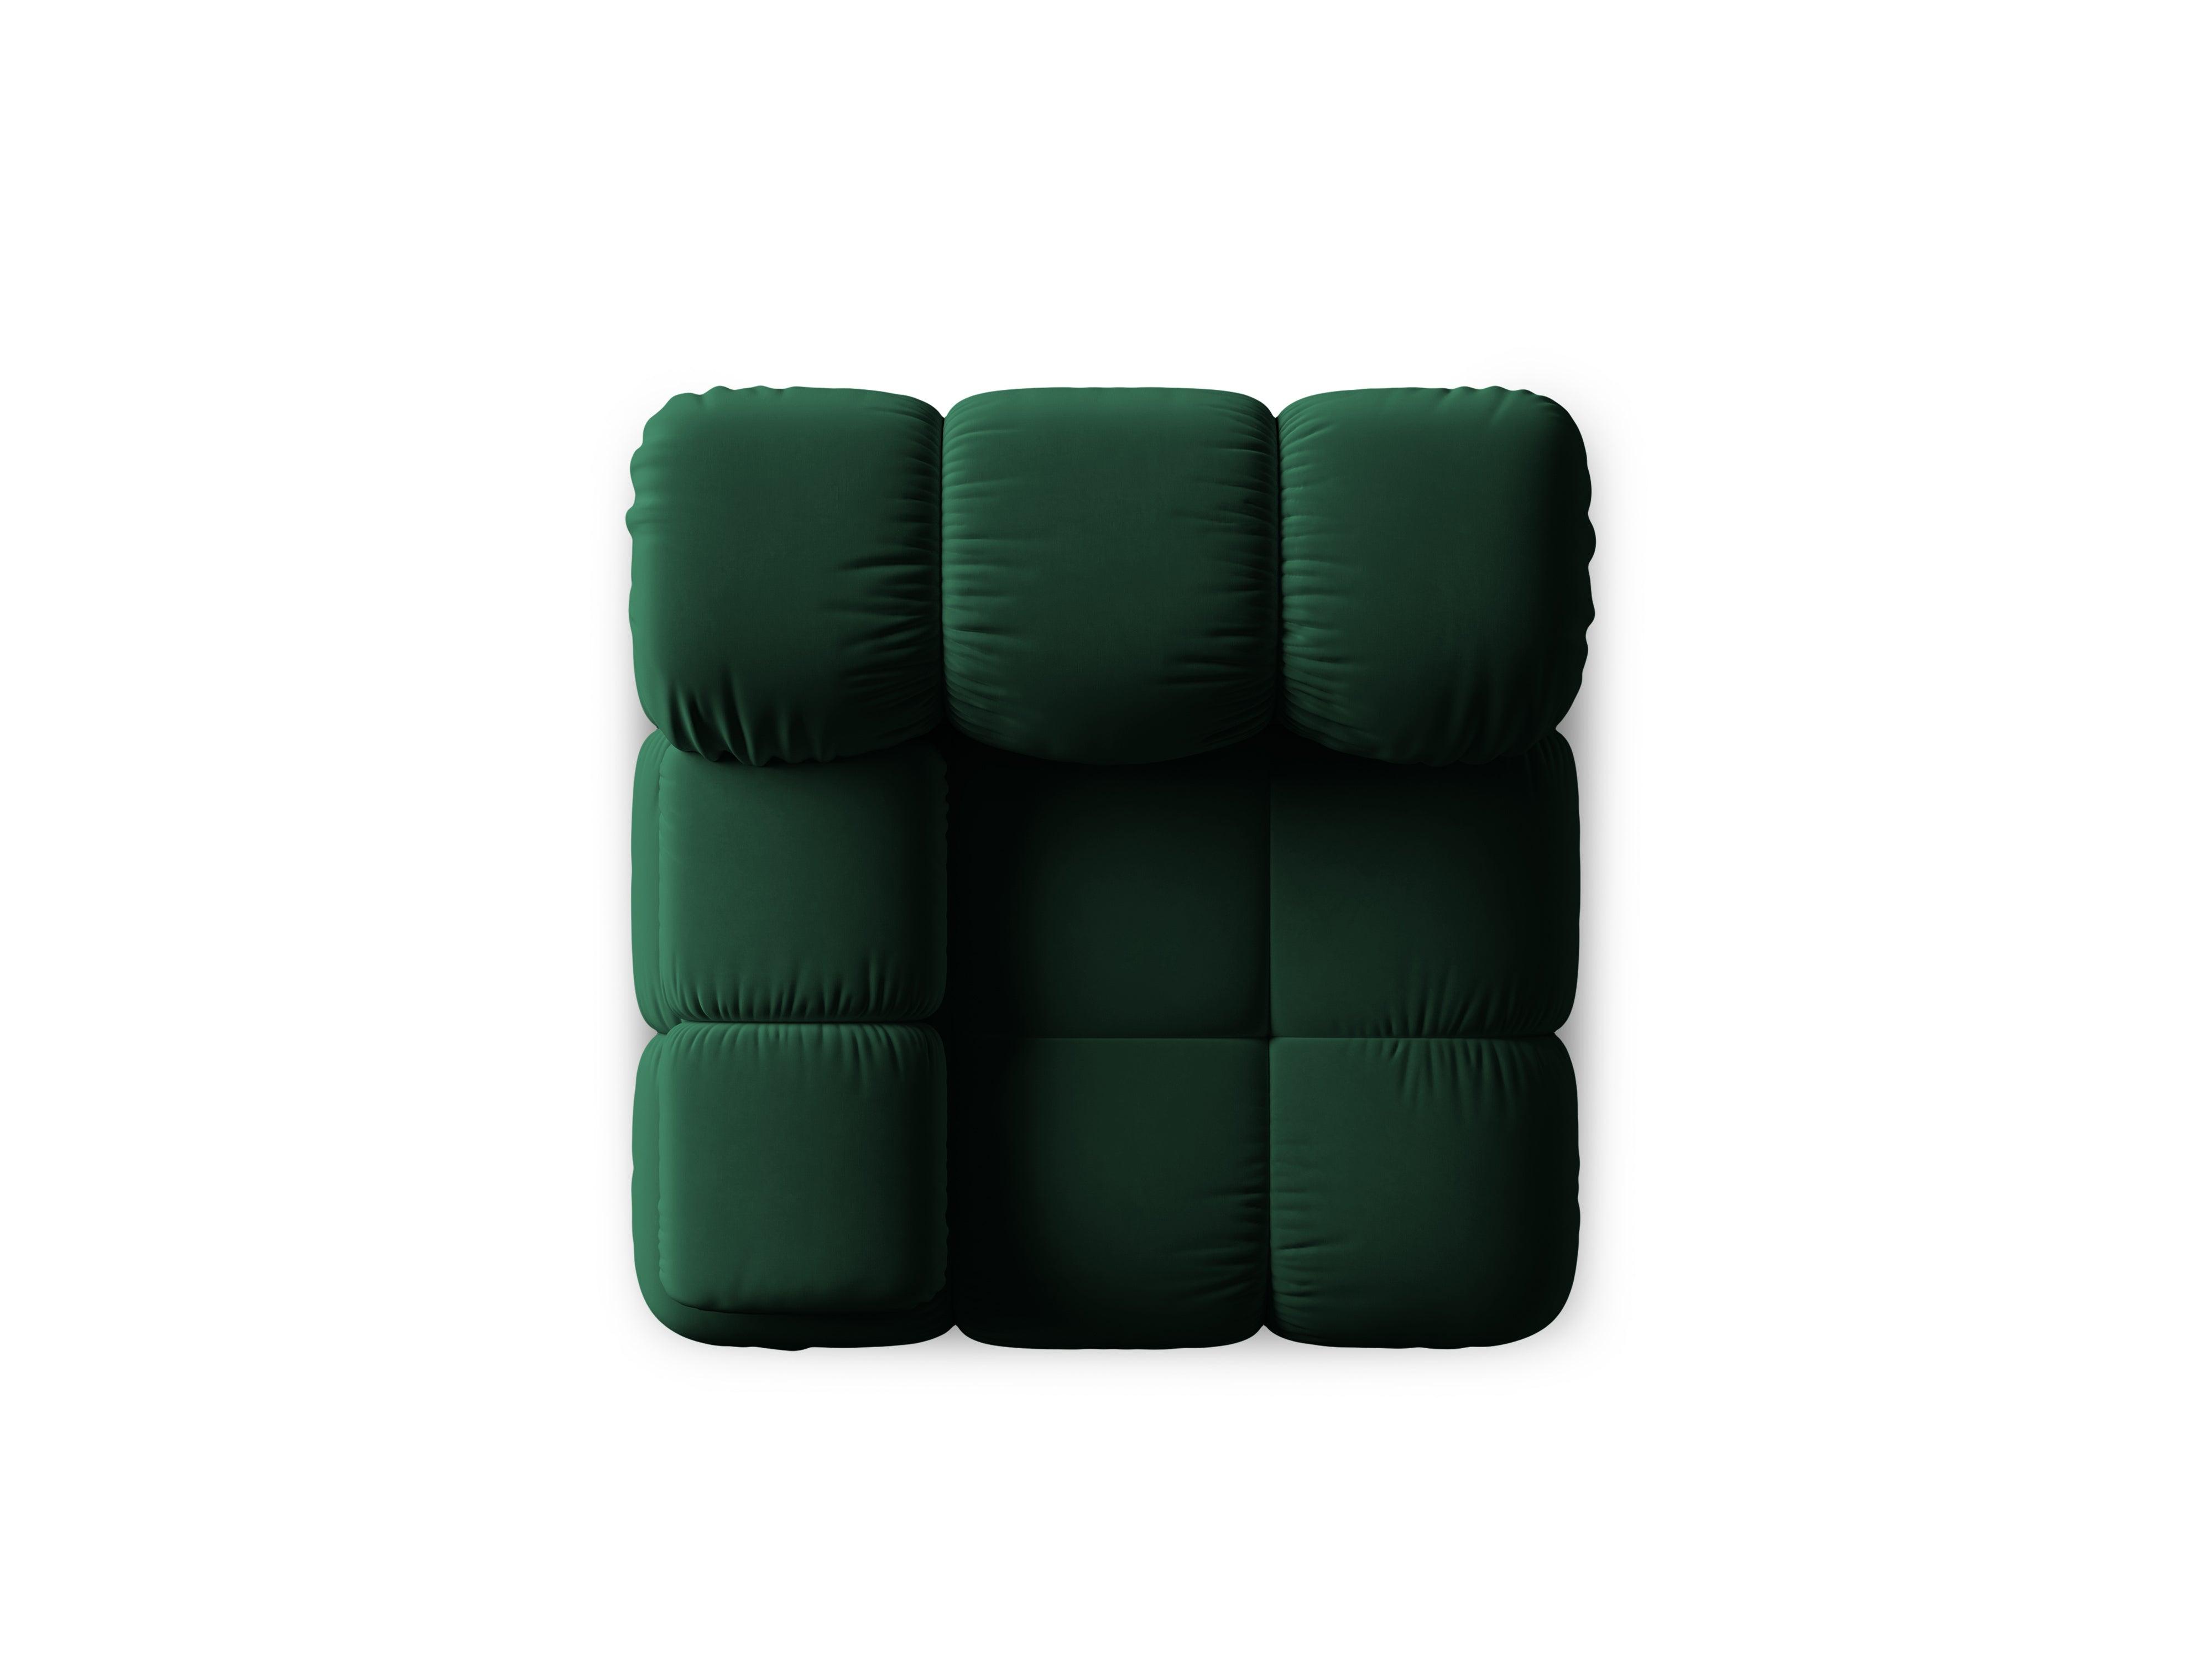 Sofa modułowa TROPEA - moduł lewostronny butelkowa zieleń Milo Casa    Eye on Design